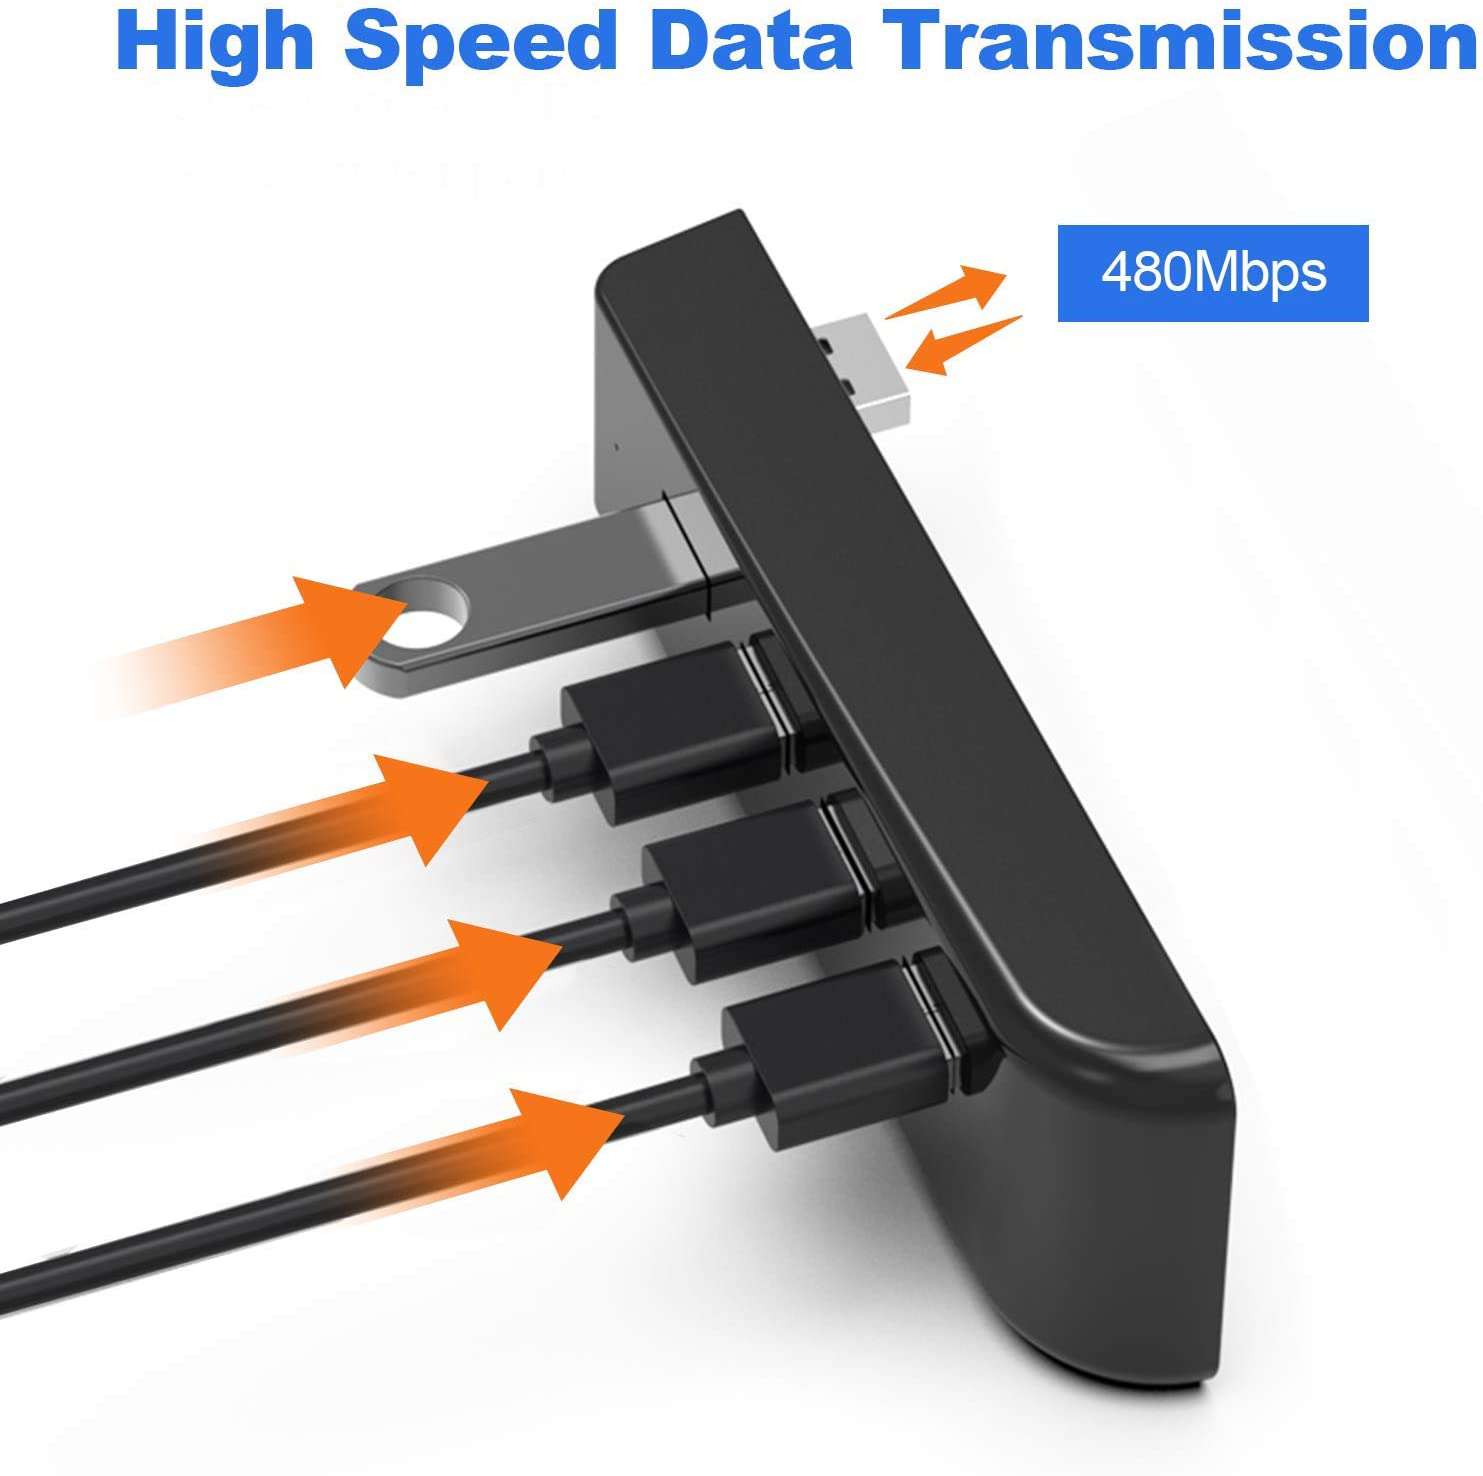 480Mbps high-speed data transfer.